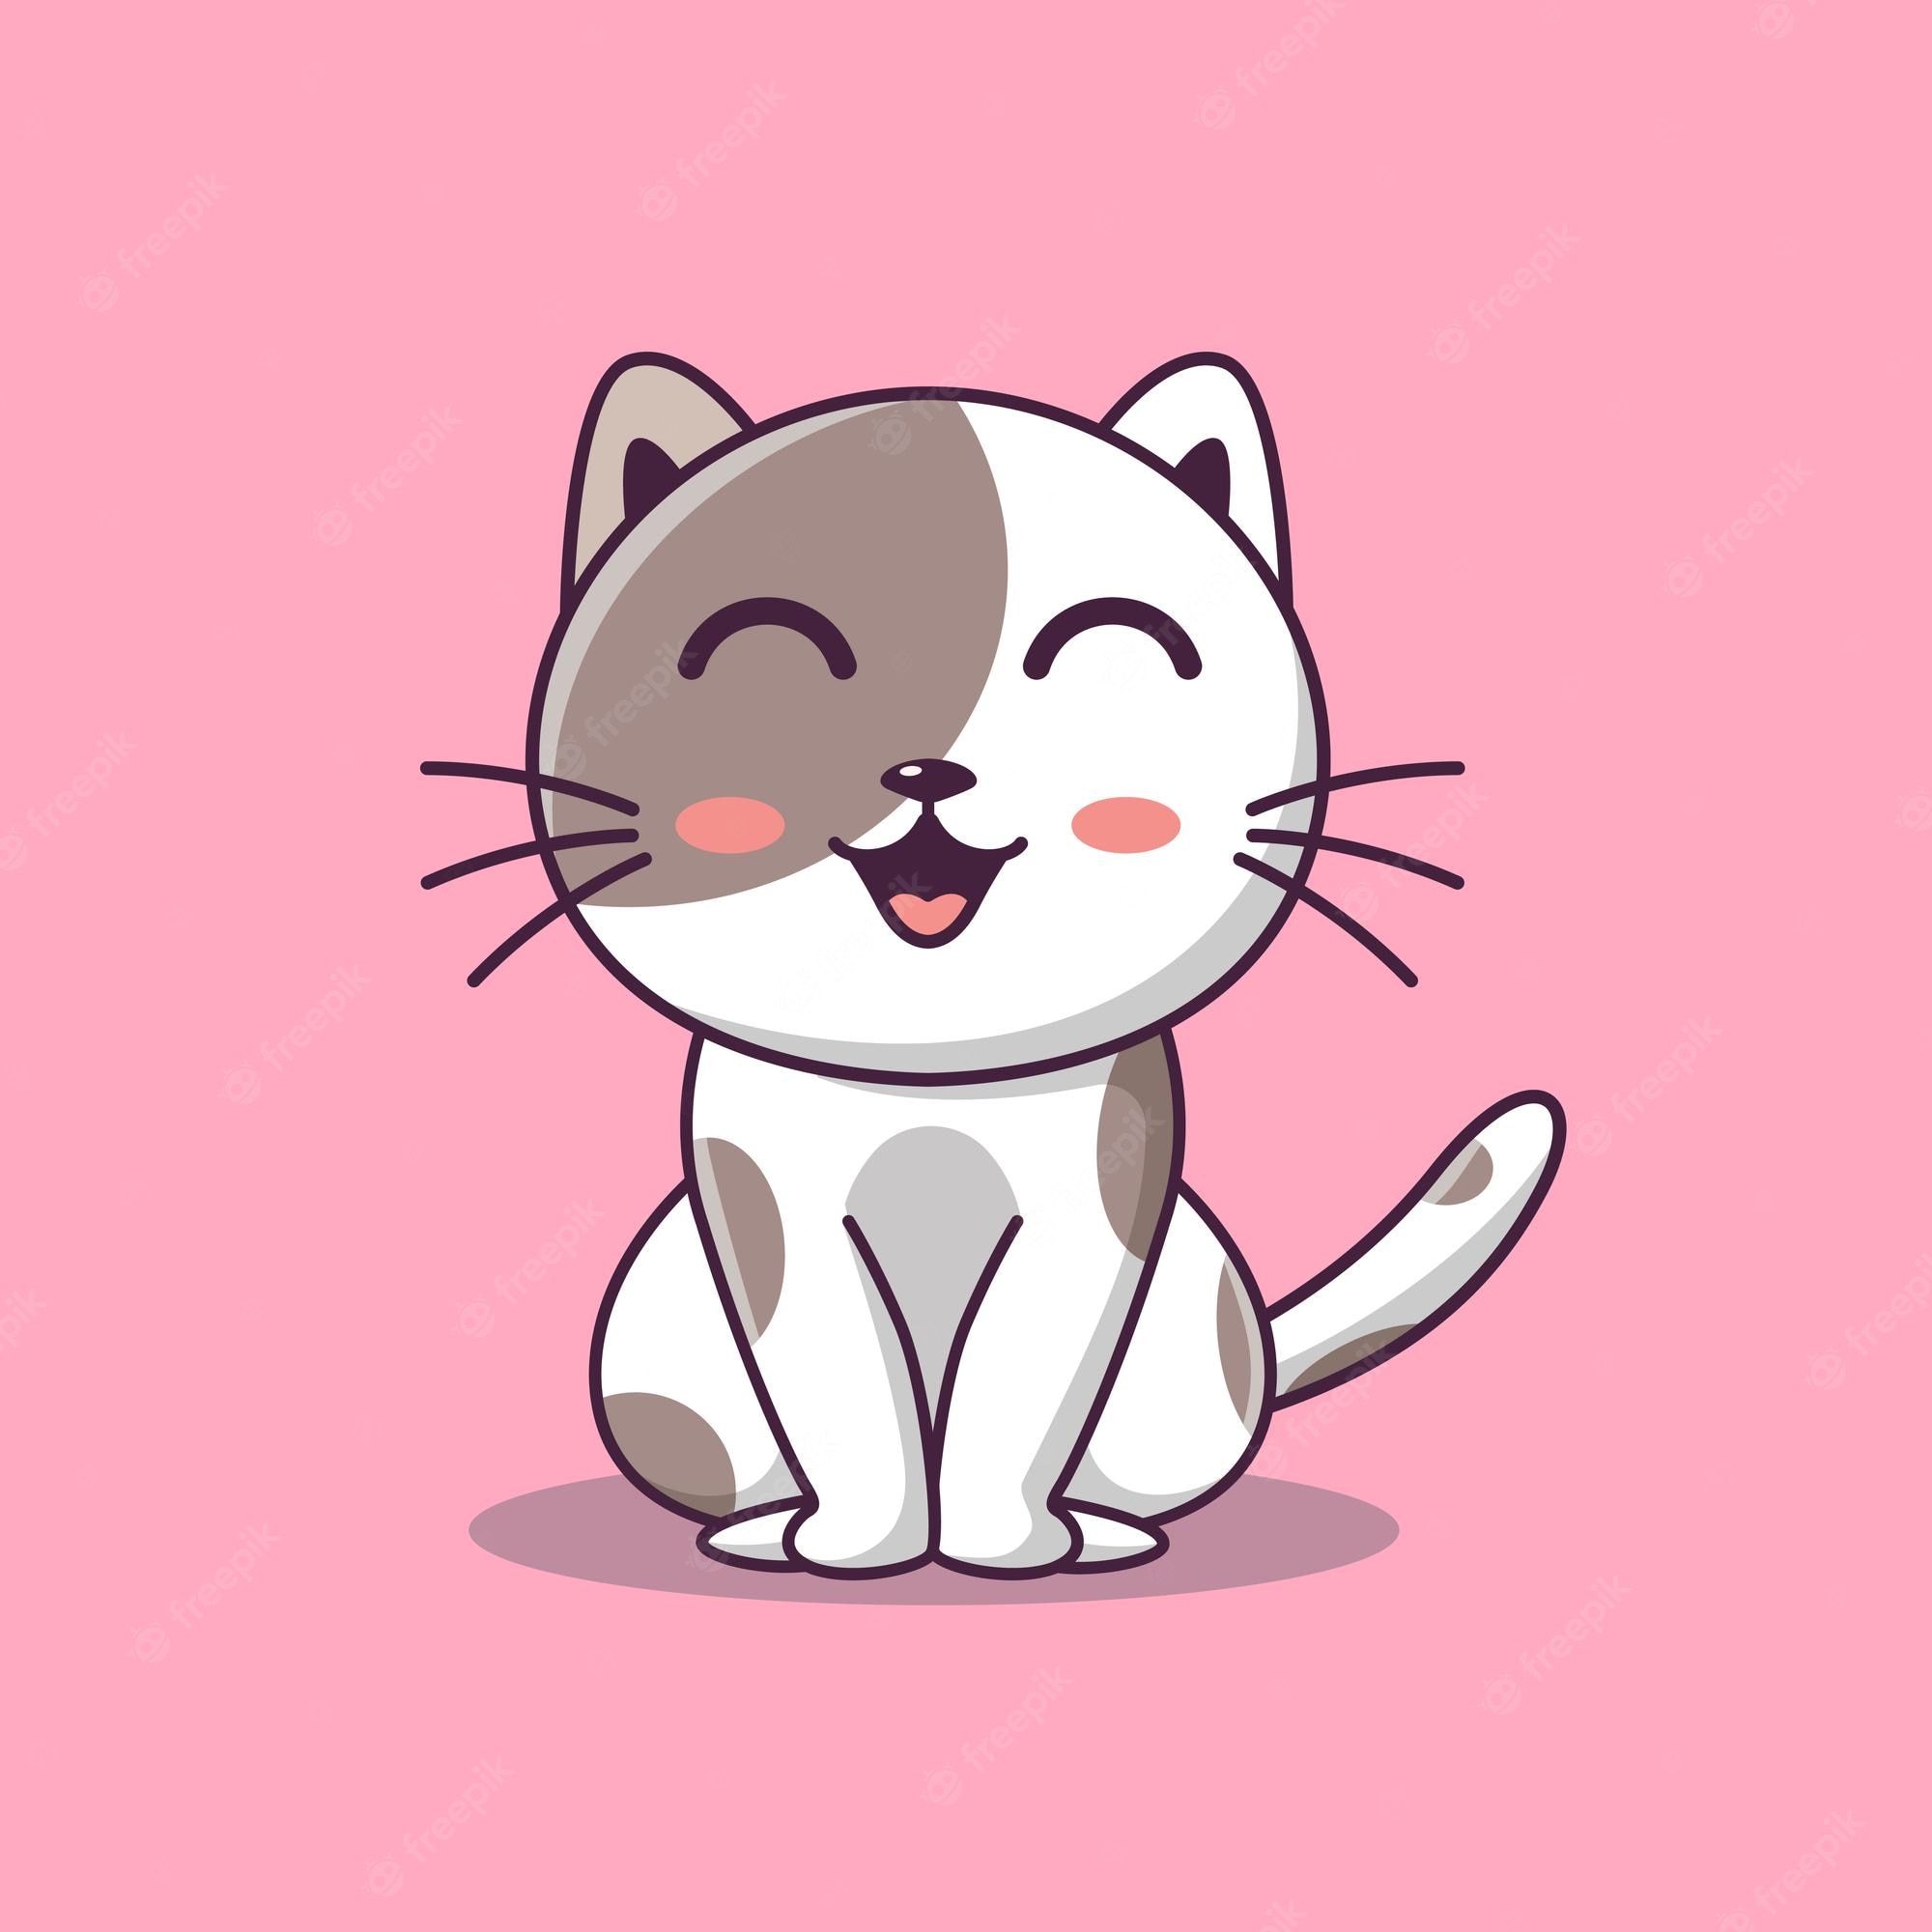 Cute Cat Cartoon Clipart Free Stock Photo - Public Domain Pictures